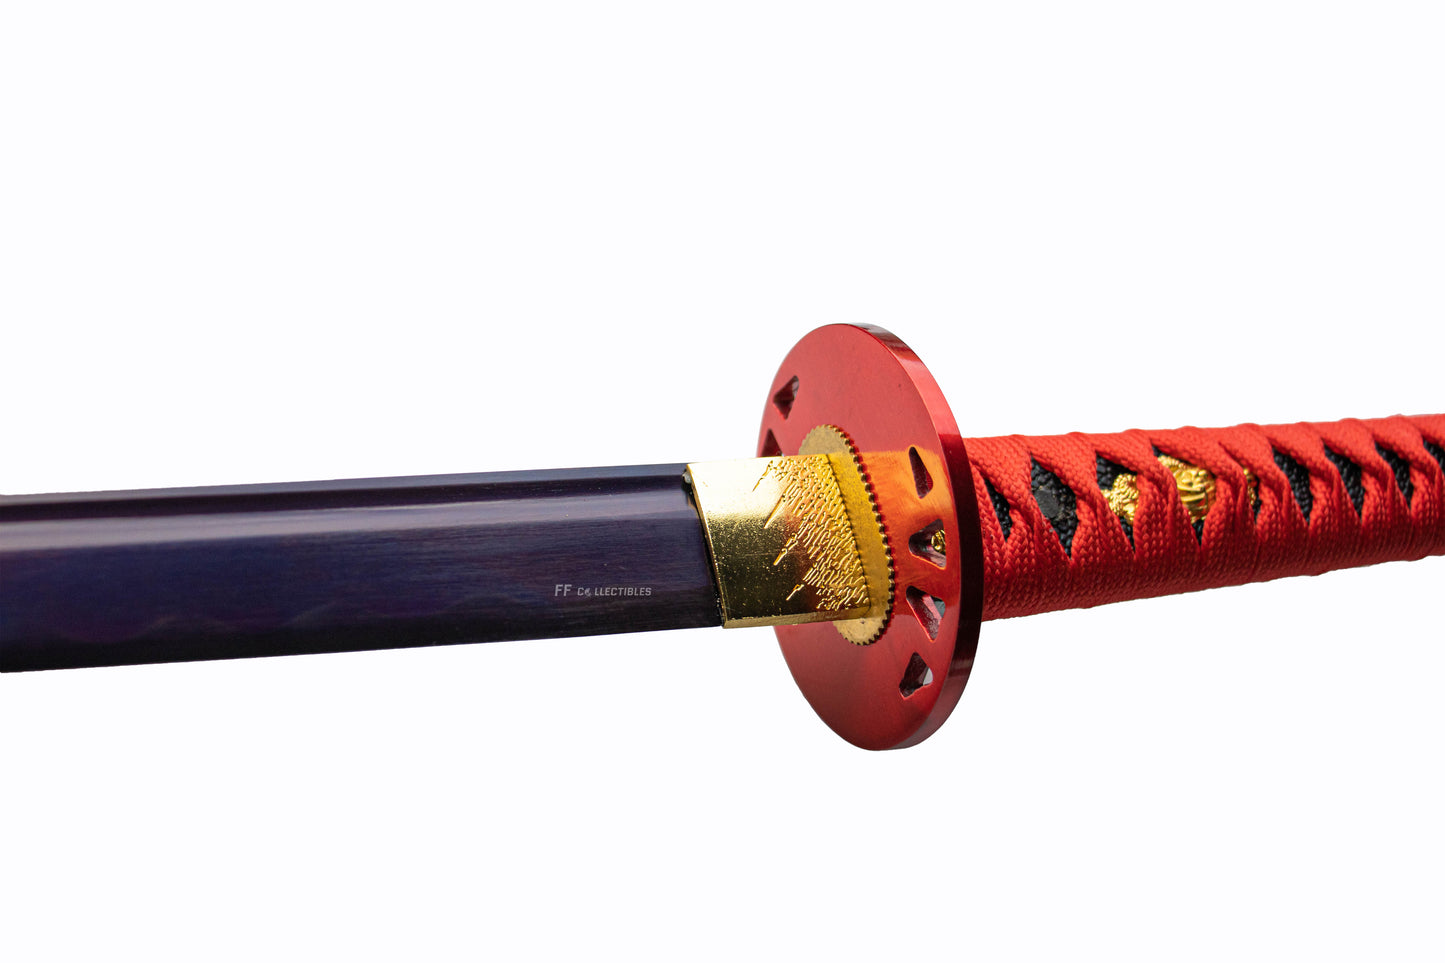 AKA MURASAKI, RED AND PURPLE - HAND FORGED CARBON STEEL JAPANESE KATANA (with FREE sword stand)